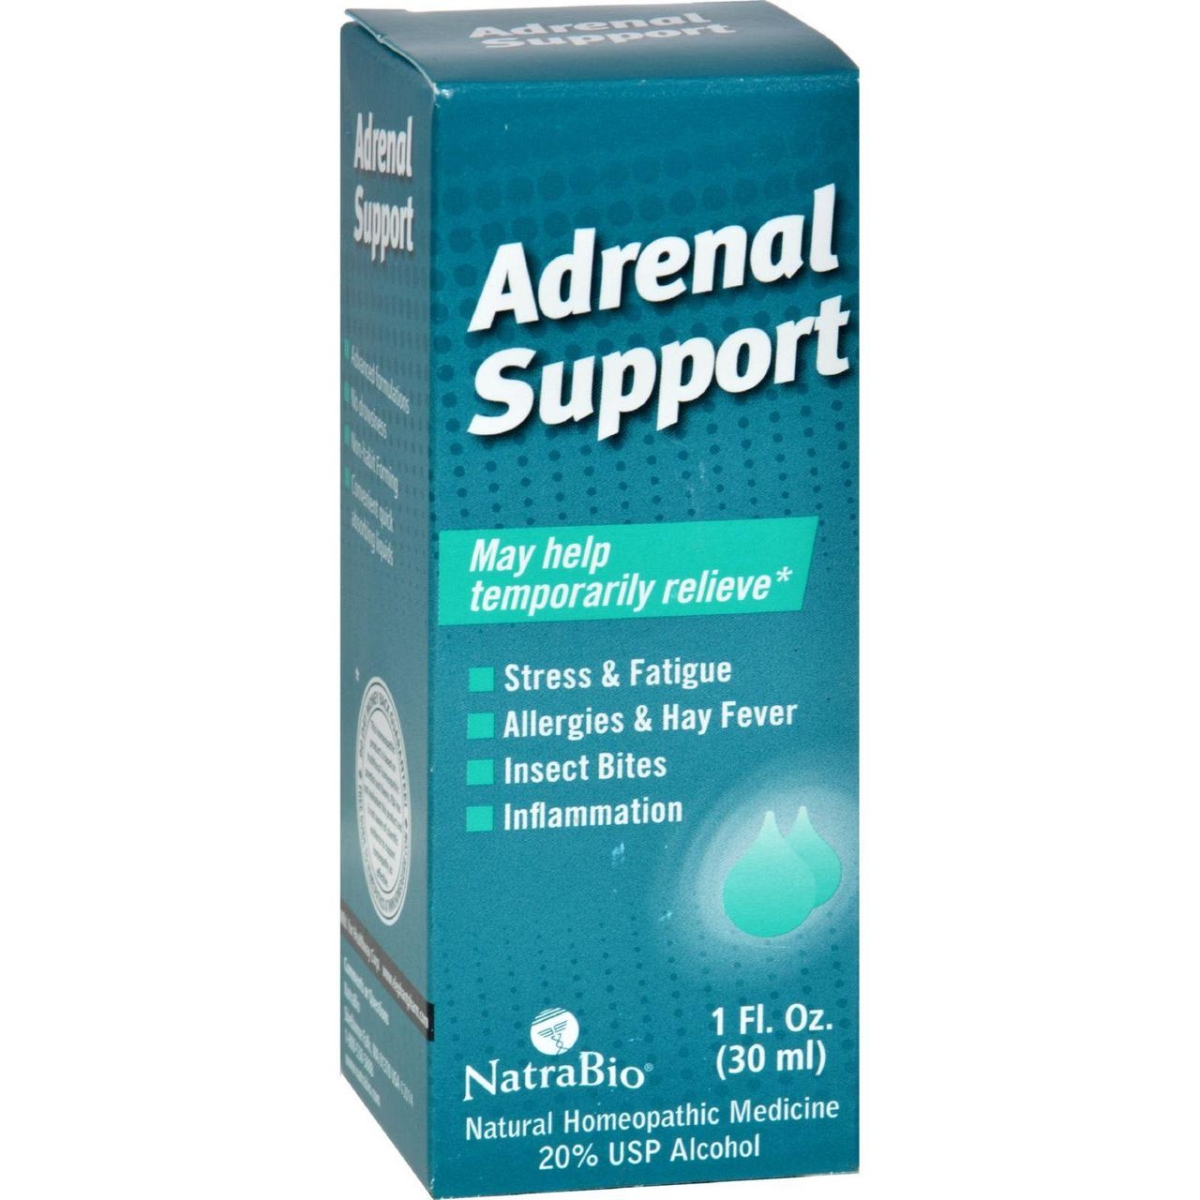 Natrabio Hg0737577 1 Fl Oz Adrenal Support